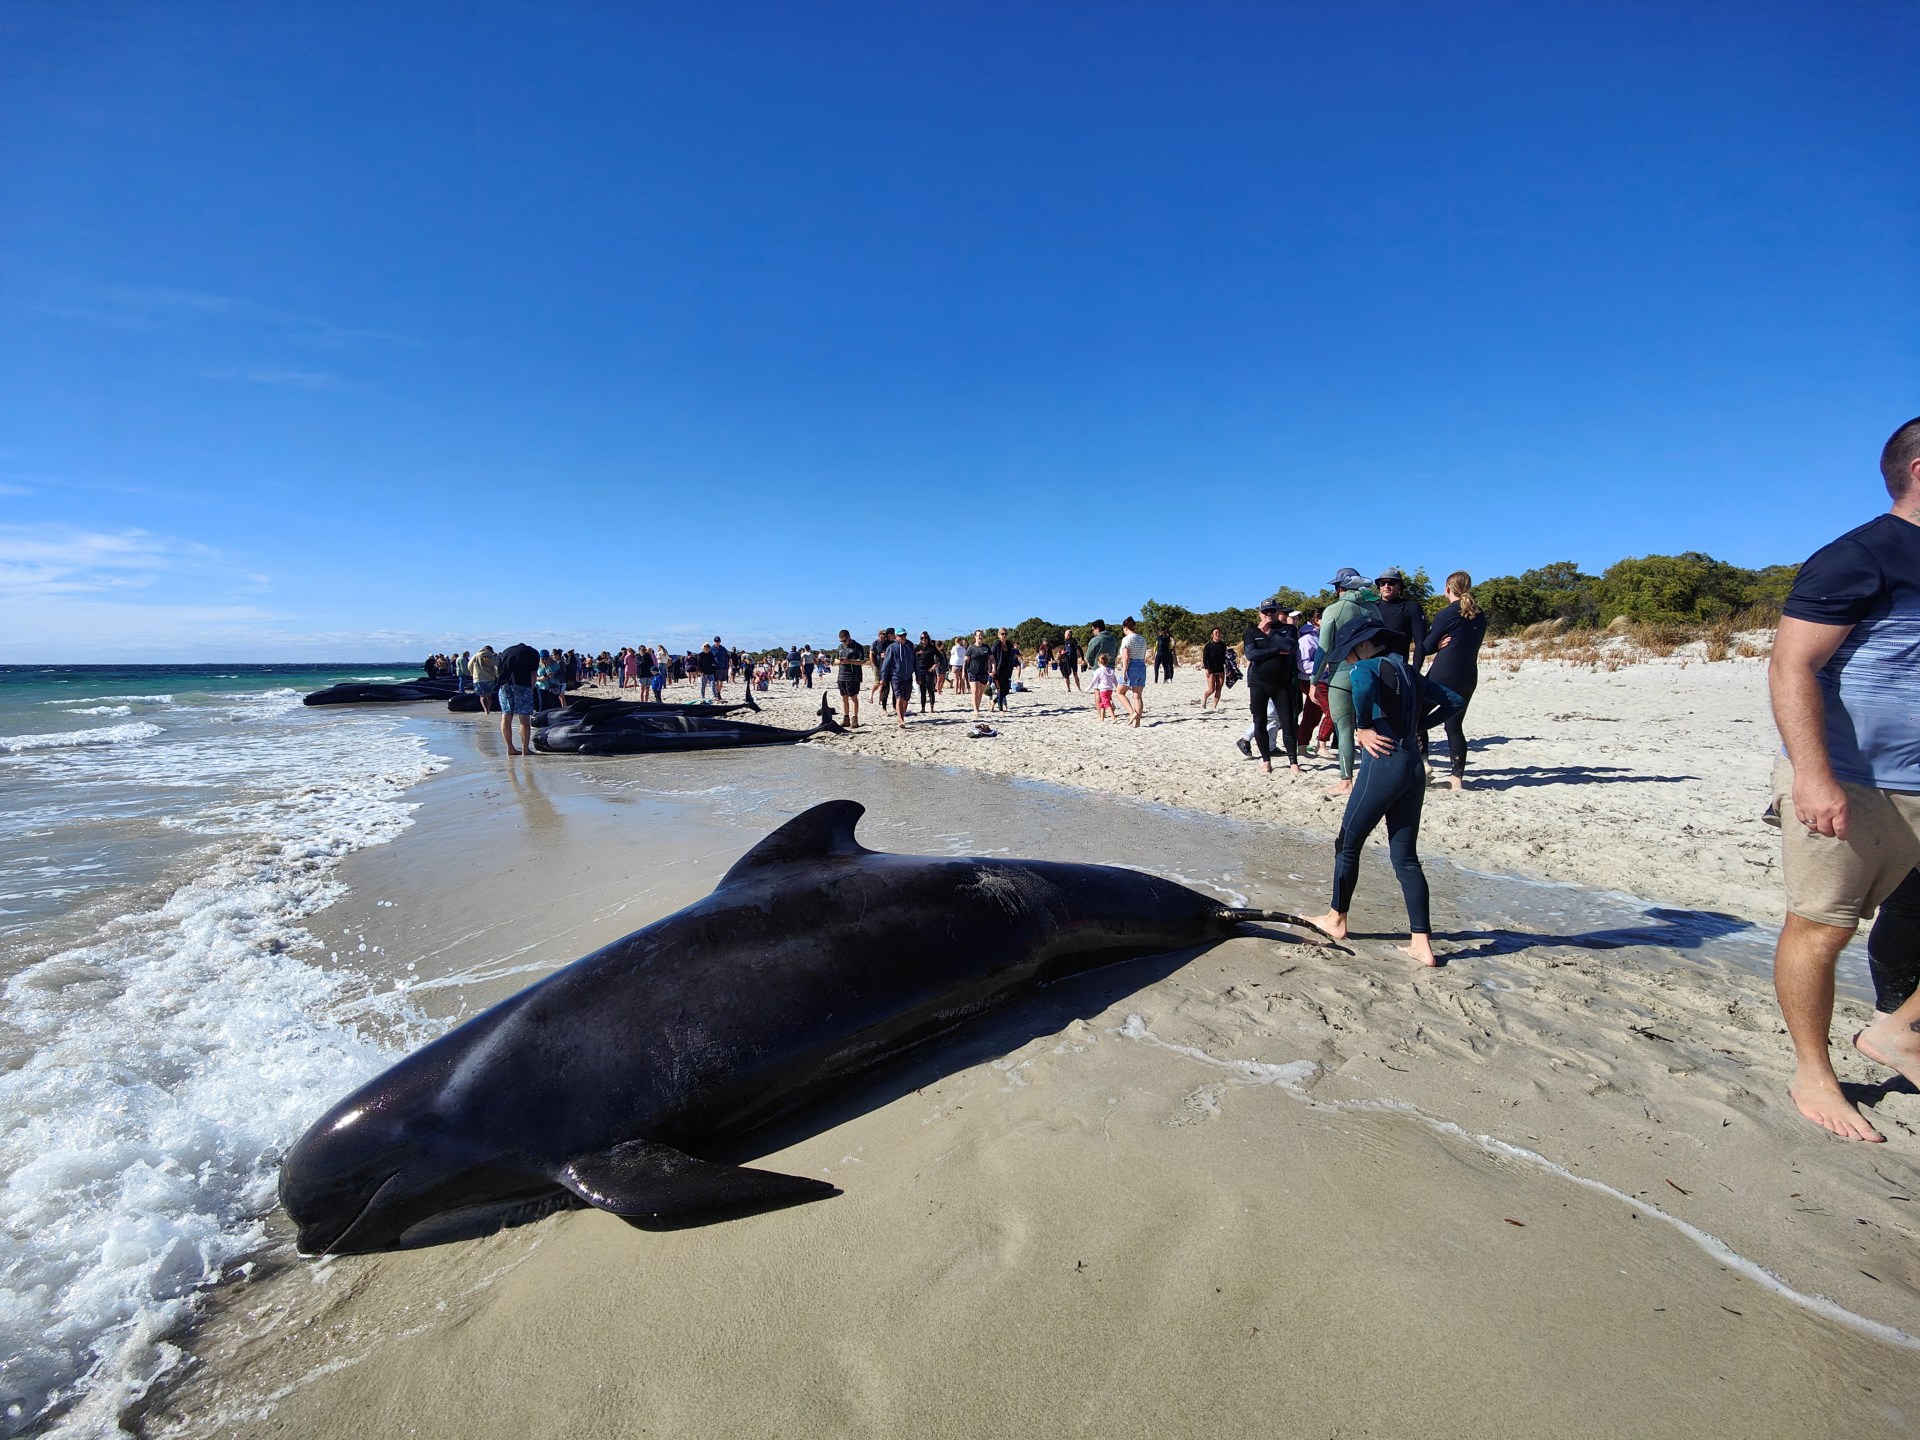 Dozens of whales stranded on beach in Australia